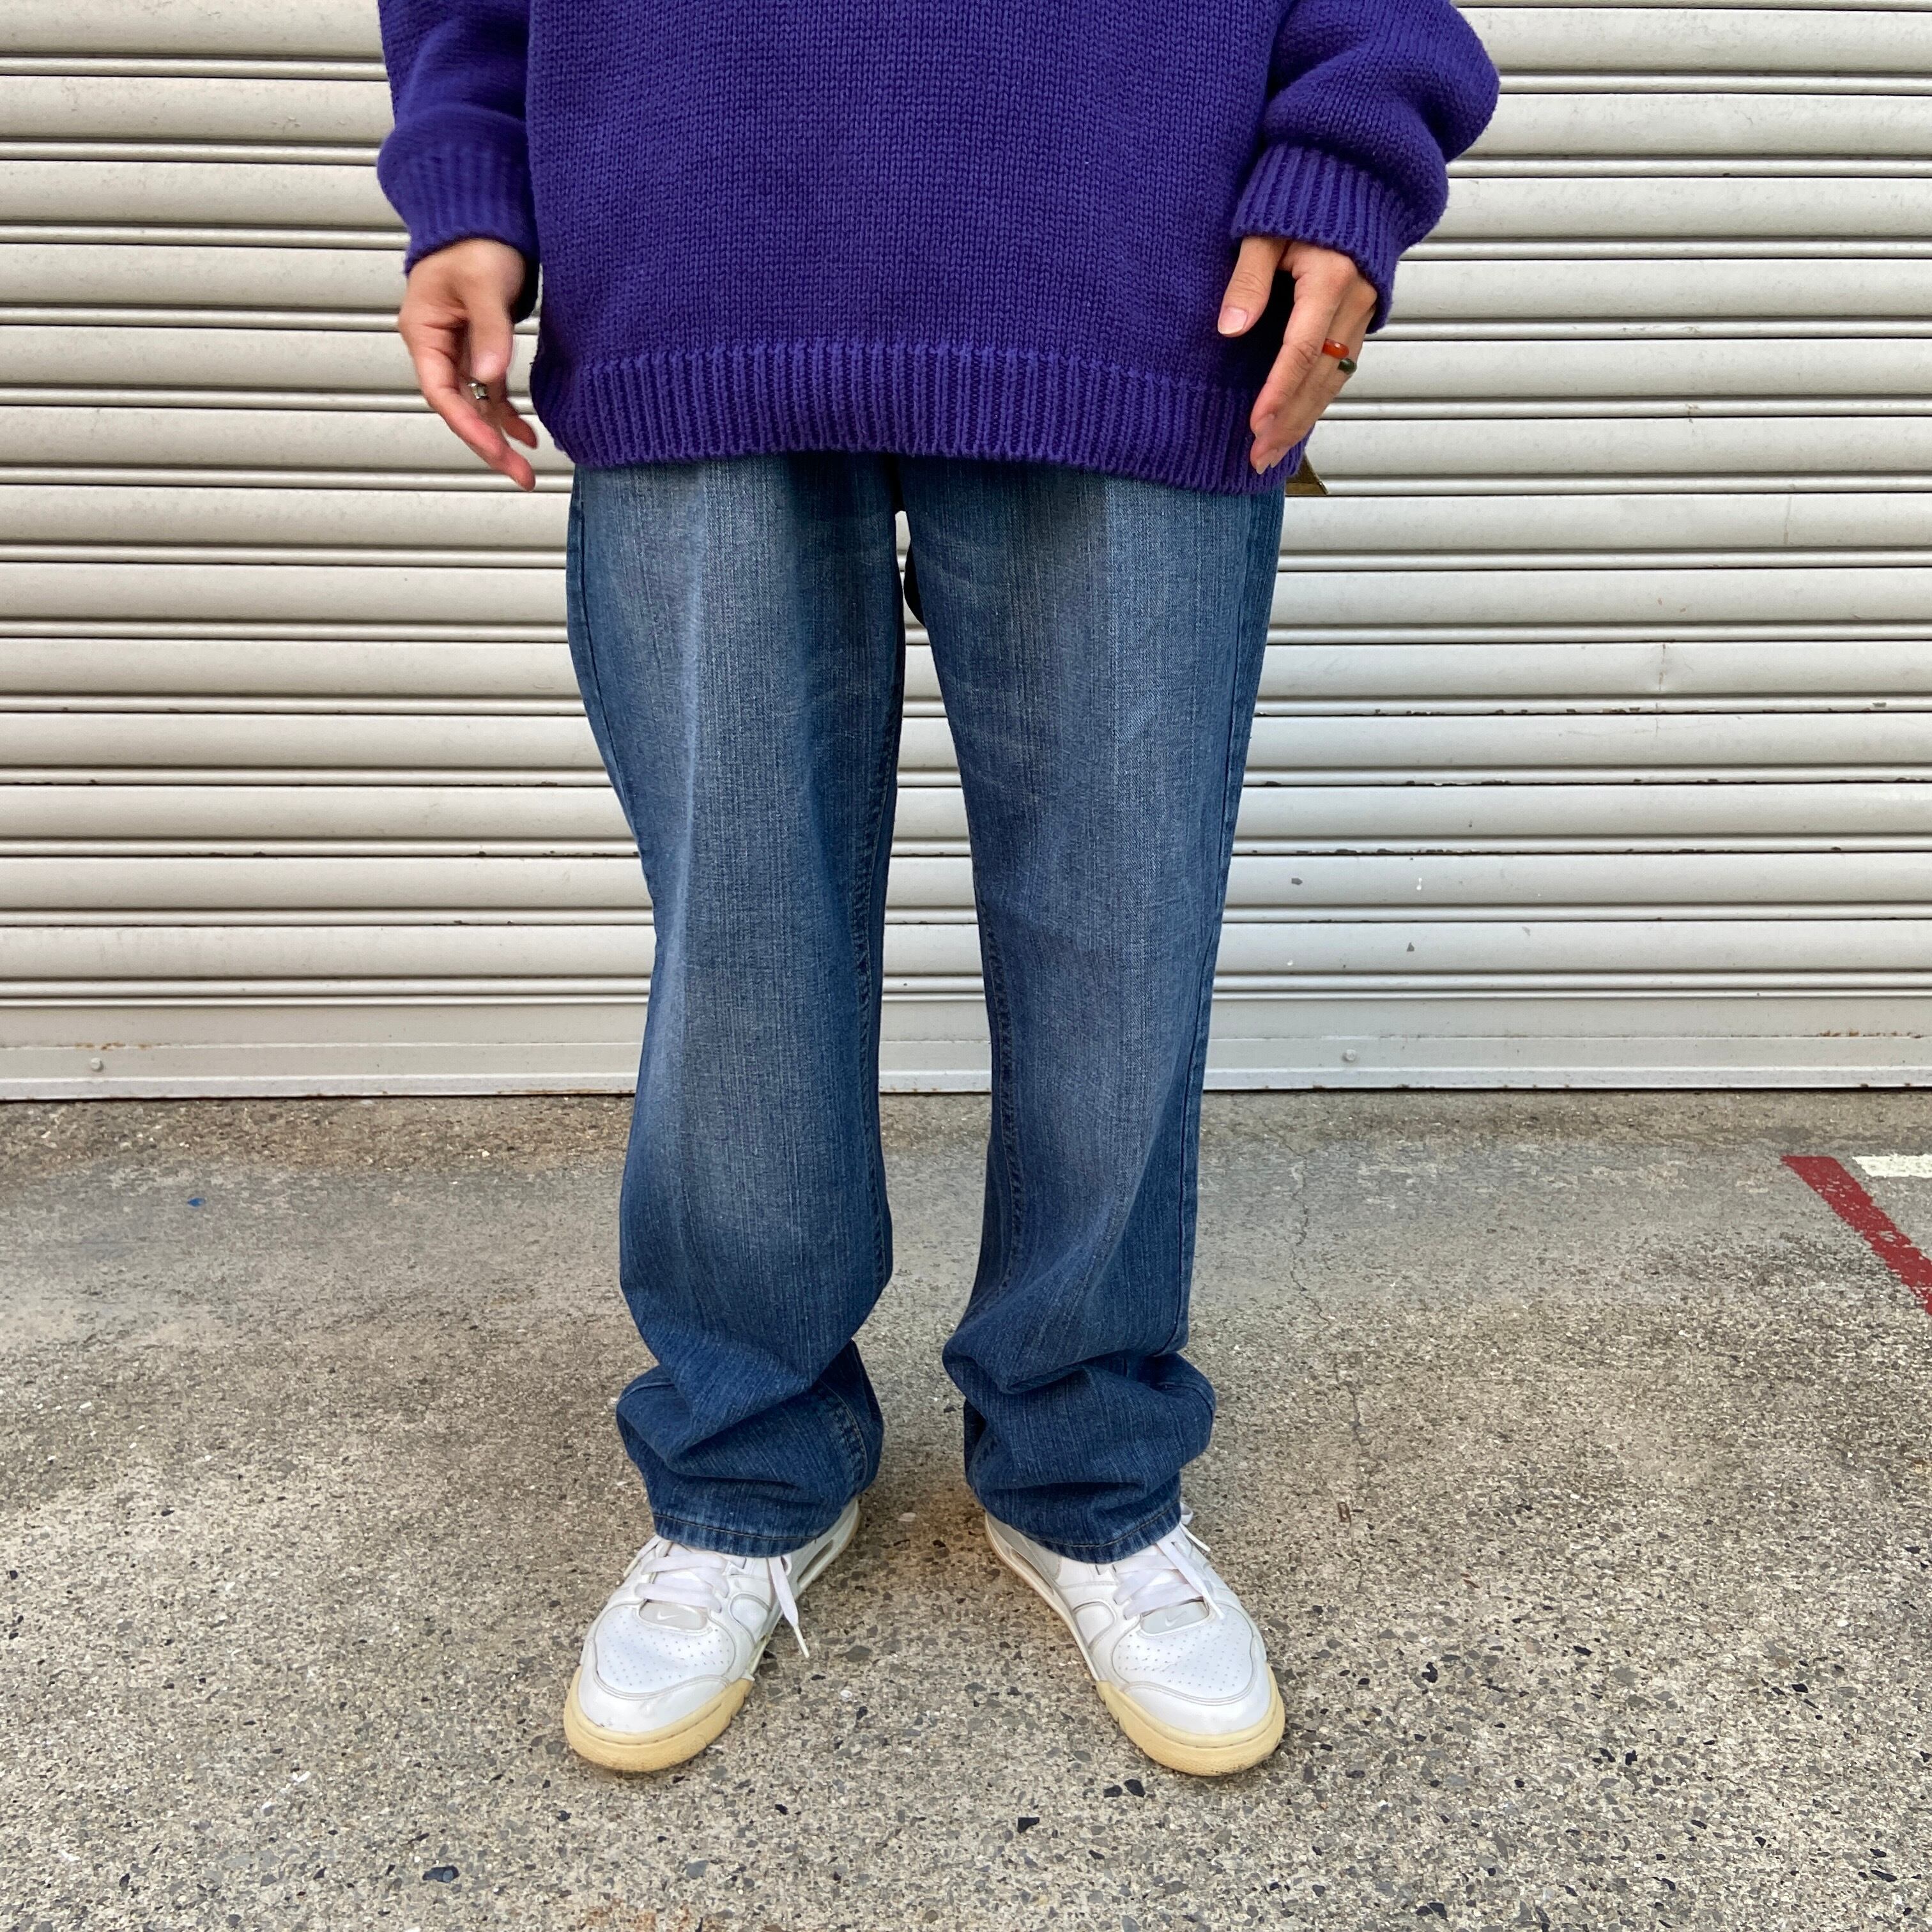 【vintage】ワイドストレート イージーパンツ スラックス 赤紫 XL